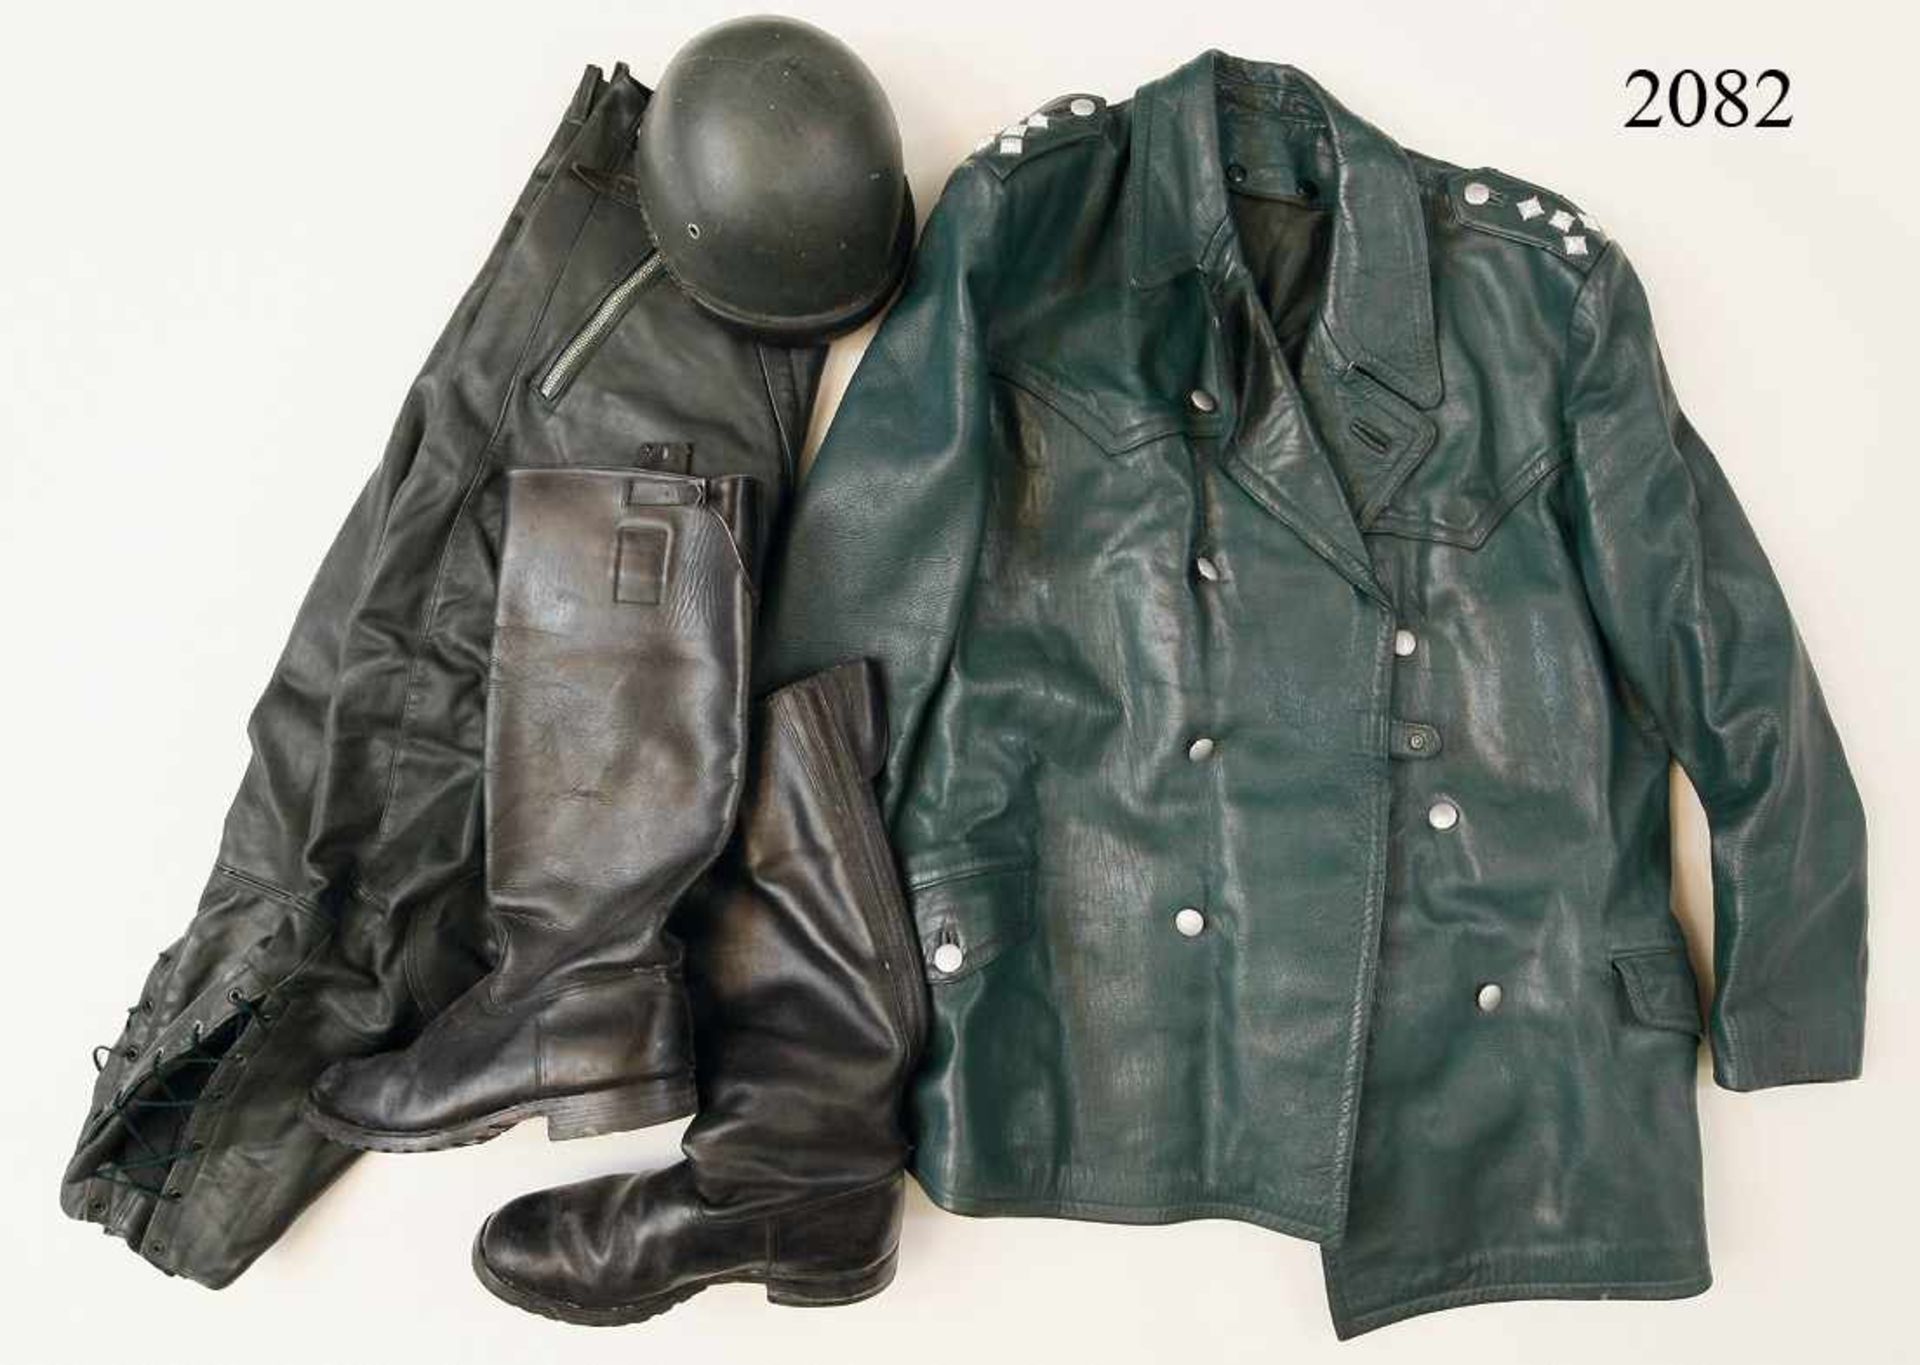 Uniform für einen Motorrad-Polizisten 1950er/60er JahreDunkelgrüne Lederjacke. Breecheshose aus